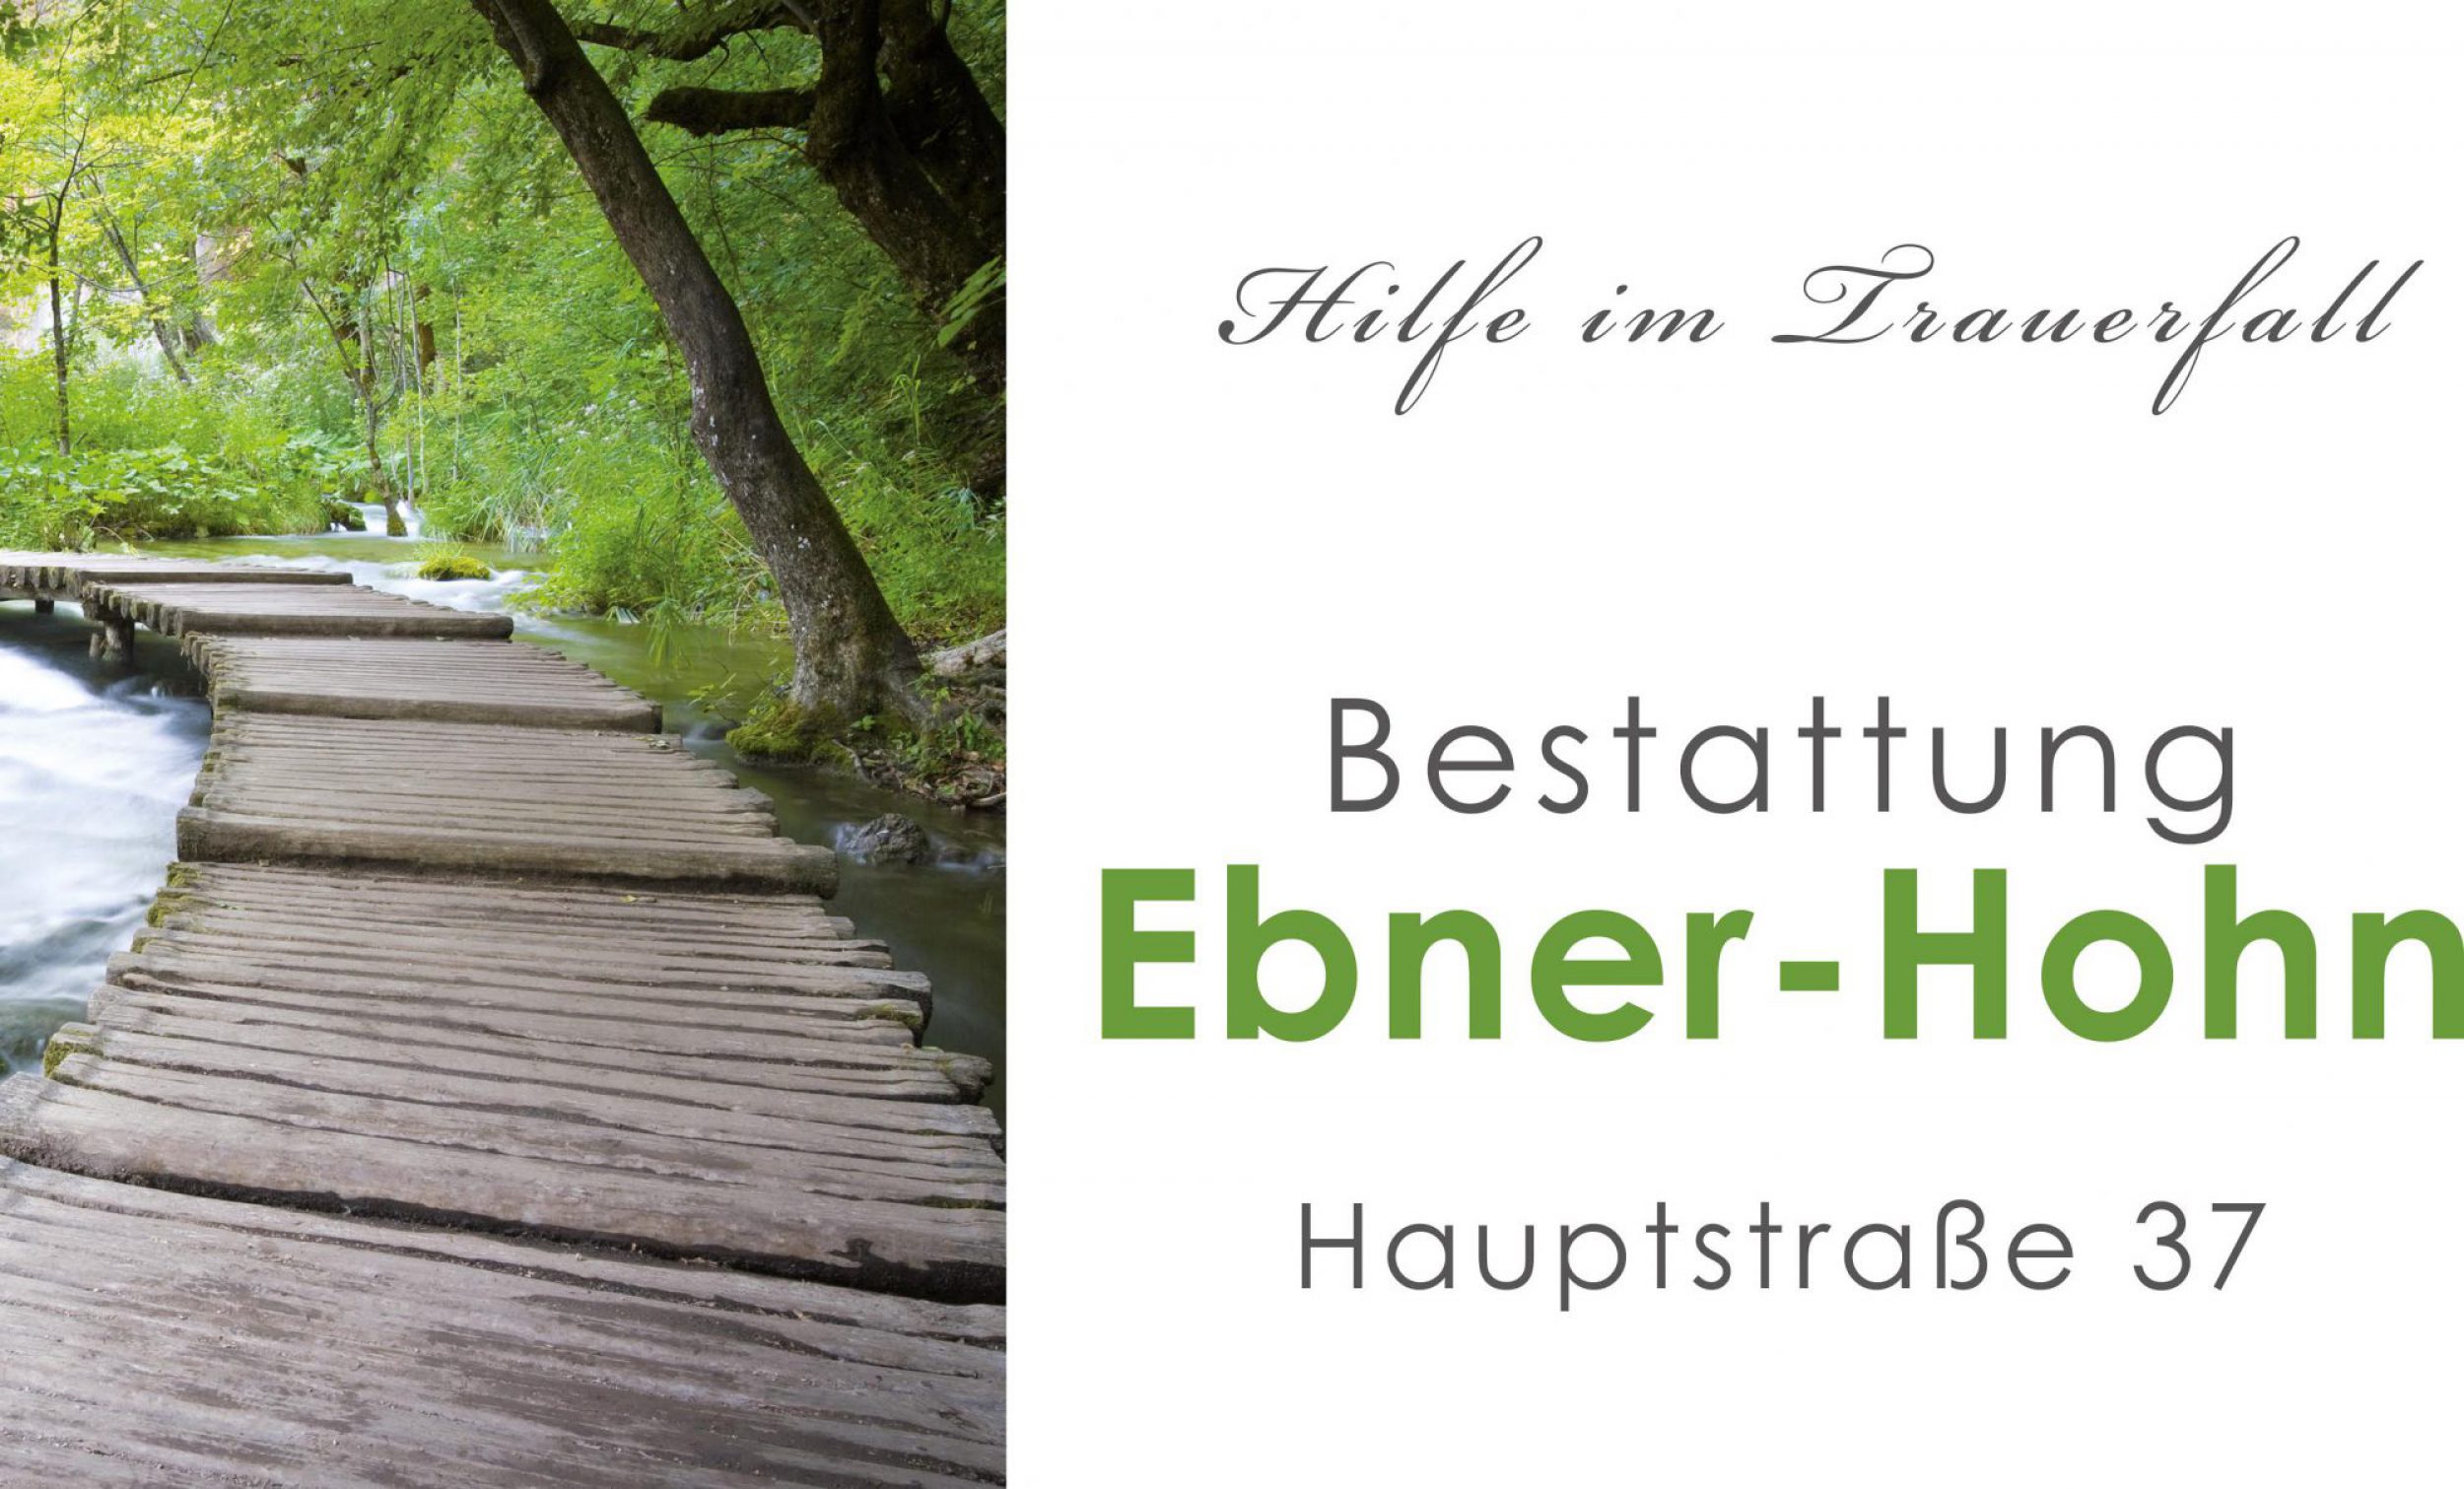 Bestattung Ebner-Hohn